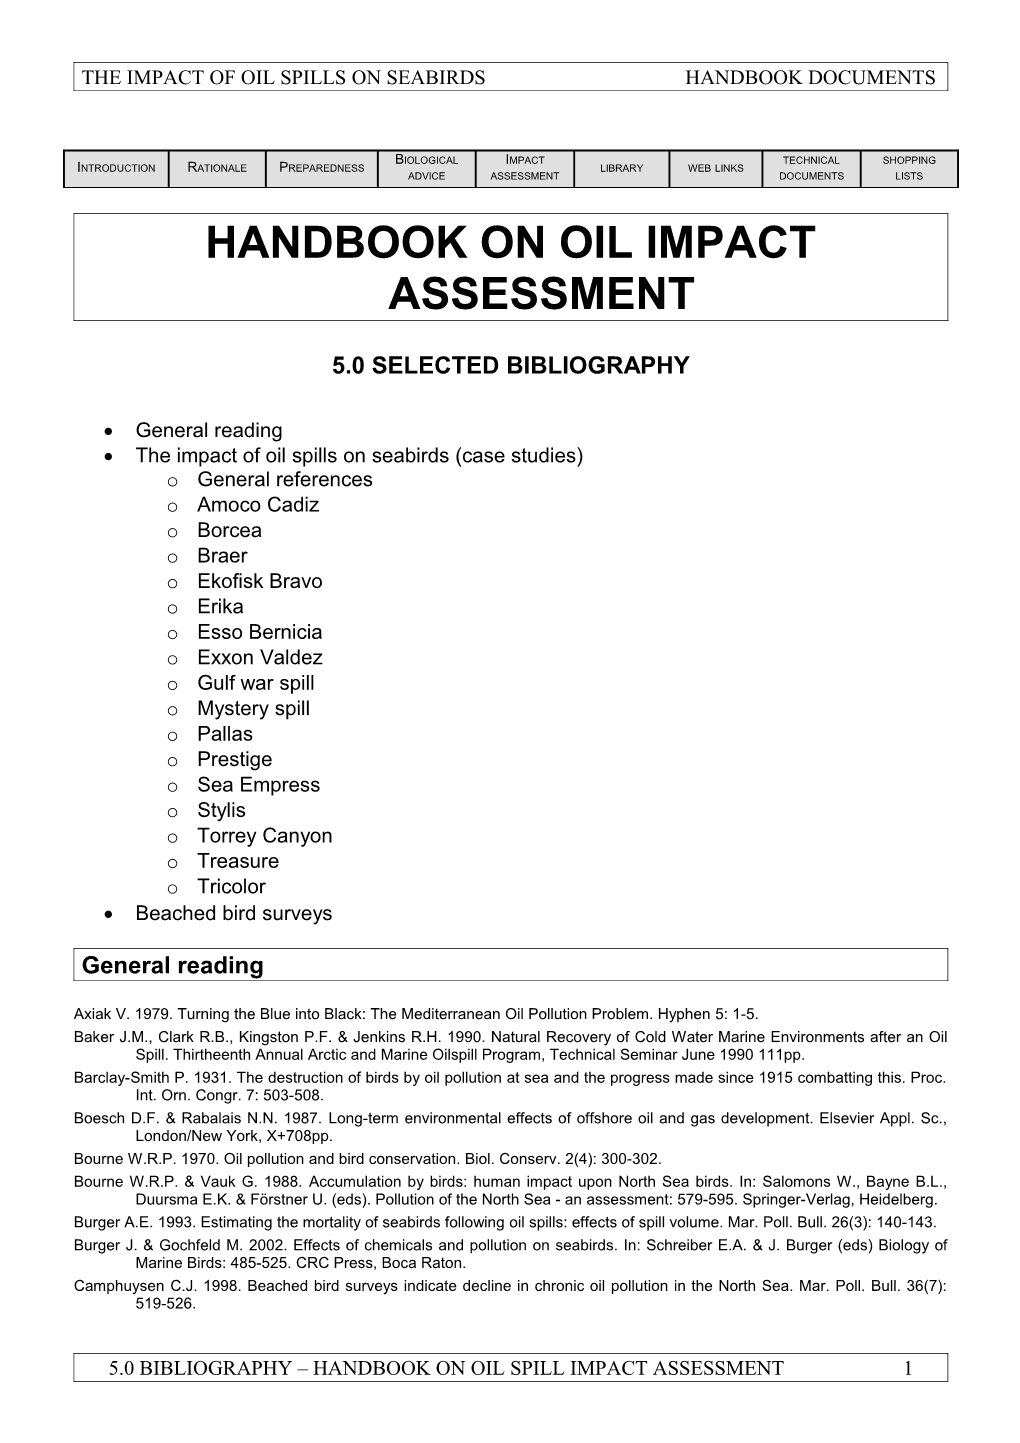 The Impact of Oil Spills on Seabirdshandbook Documents